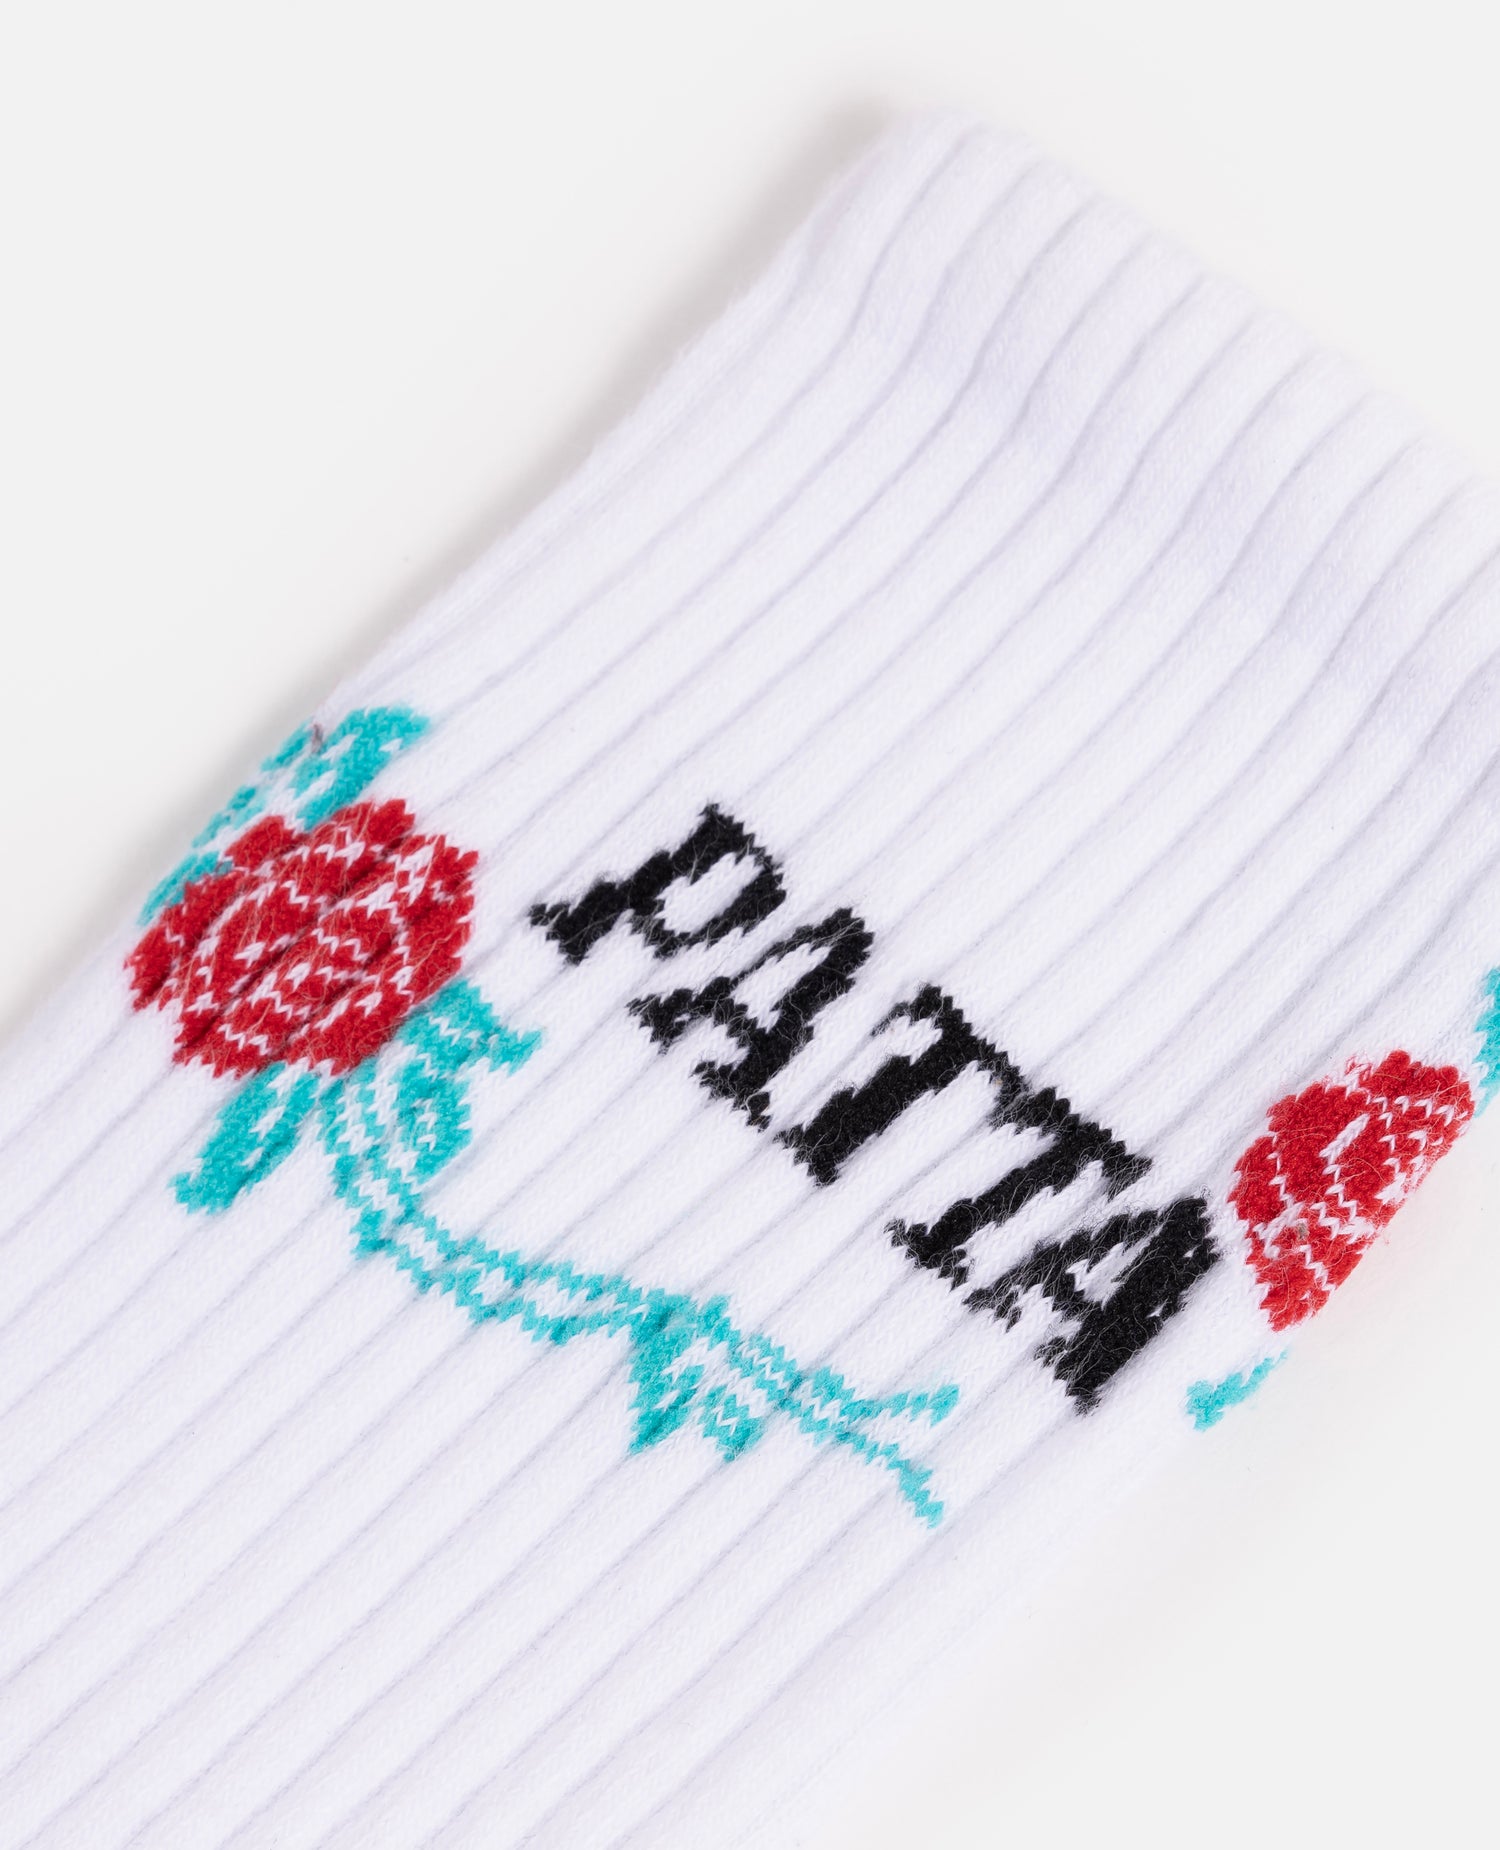 Patta Rose Sports Socks (White)